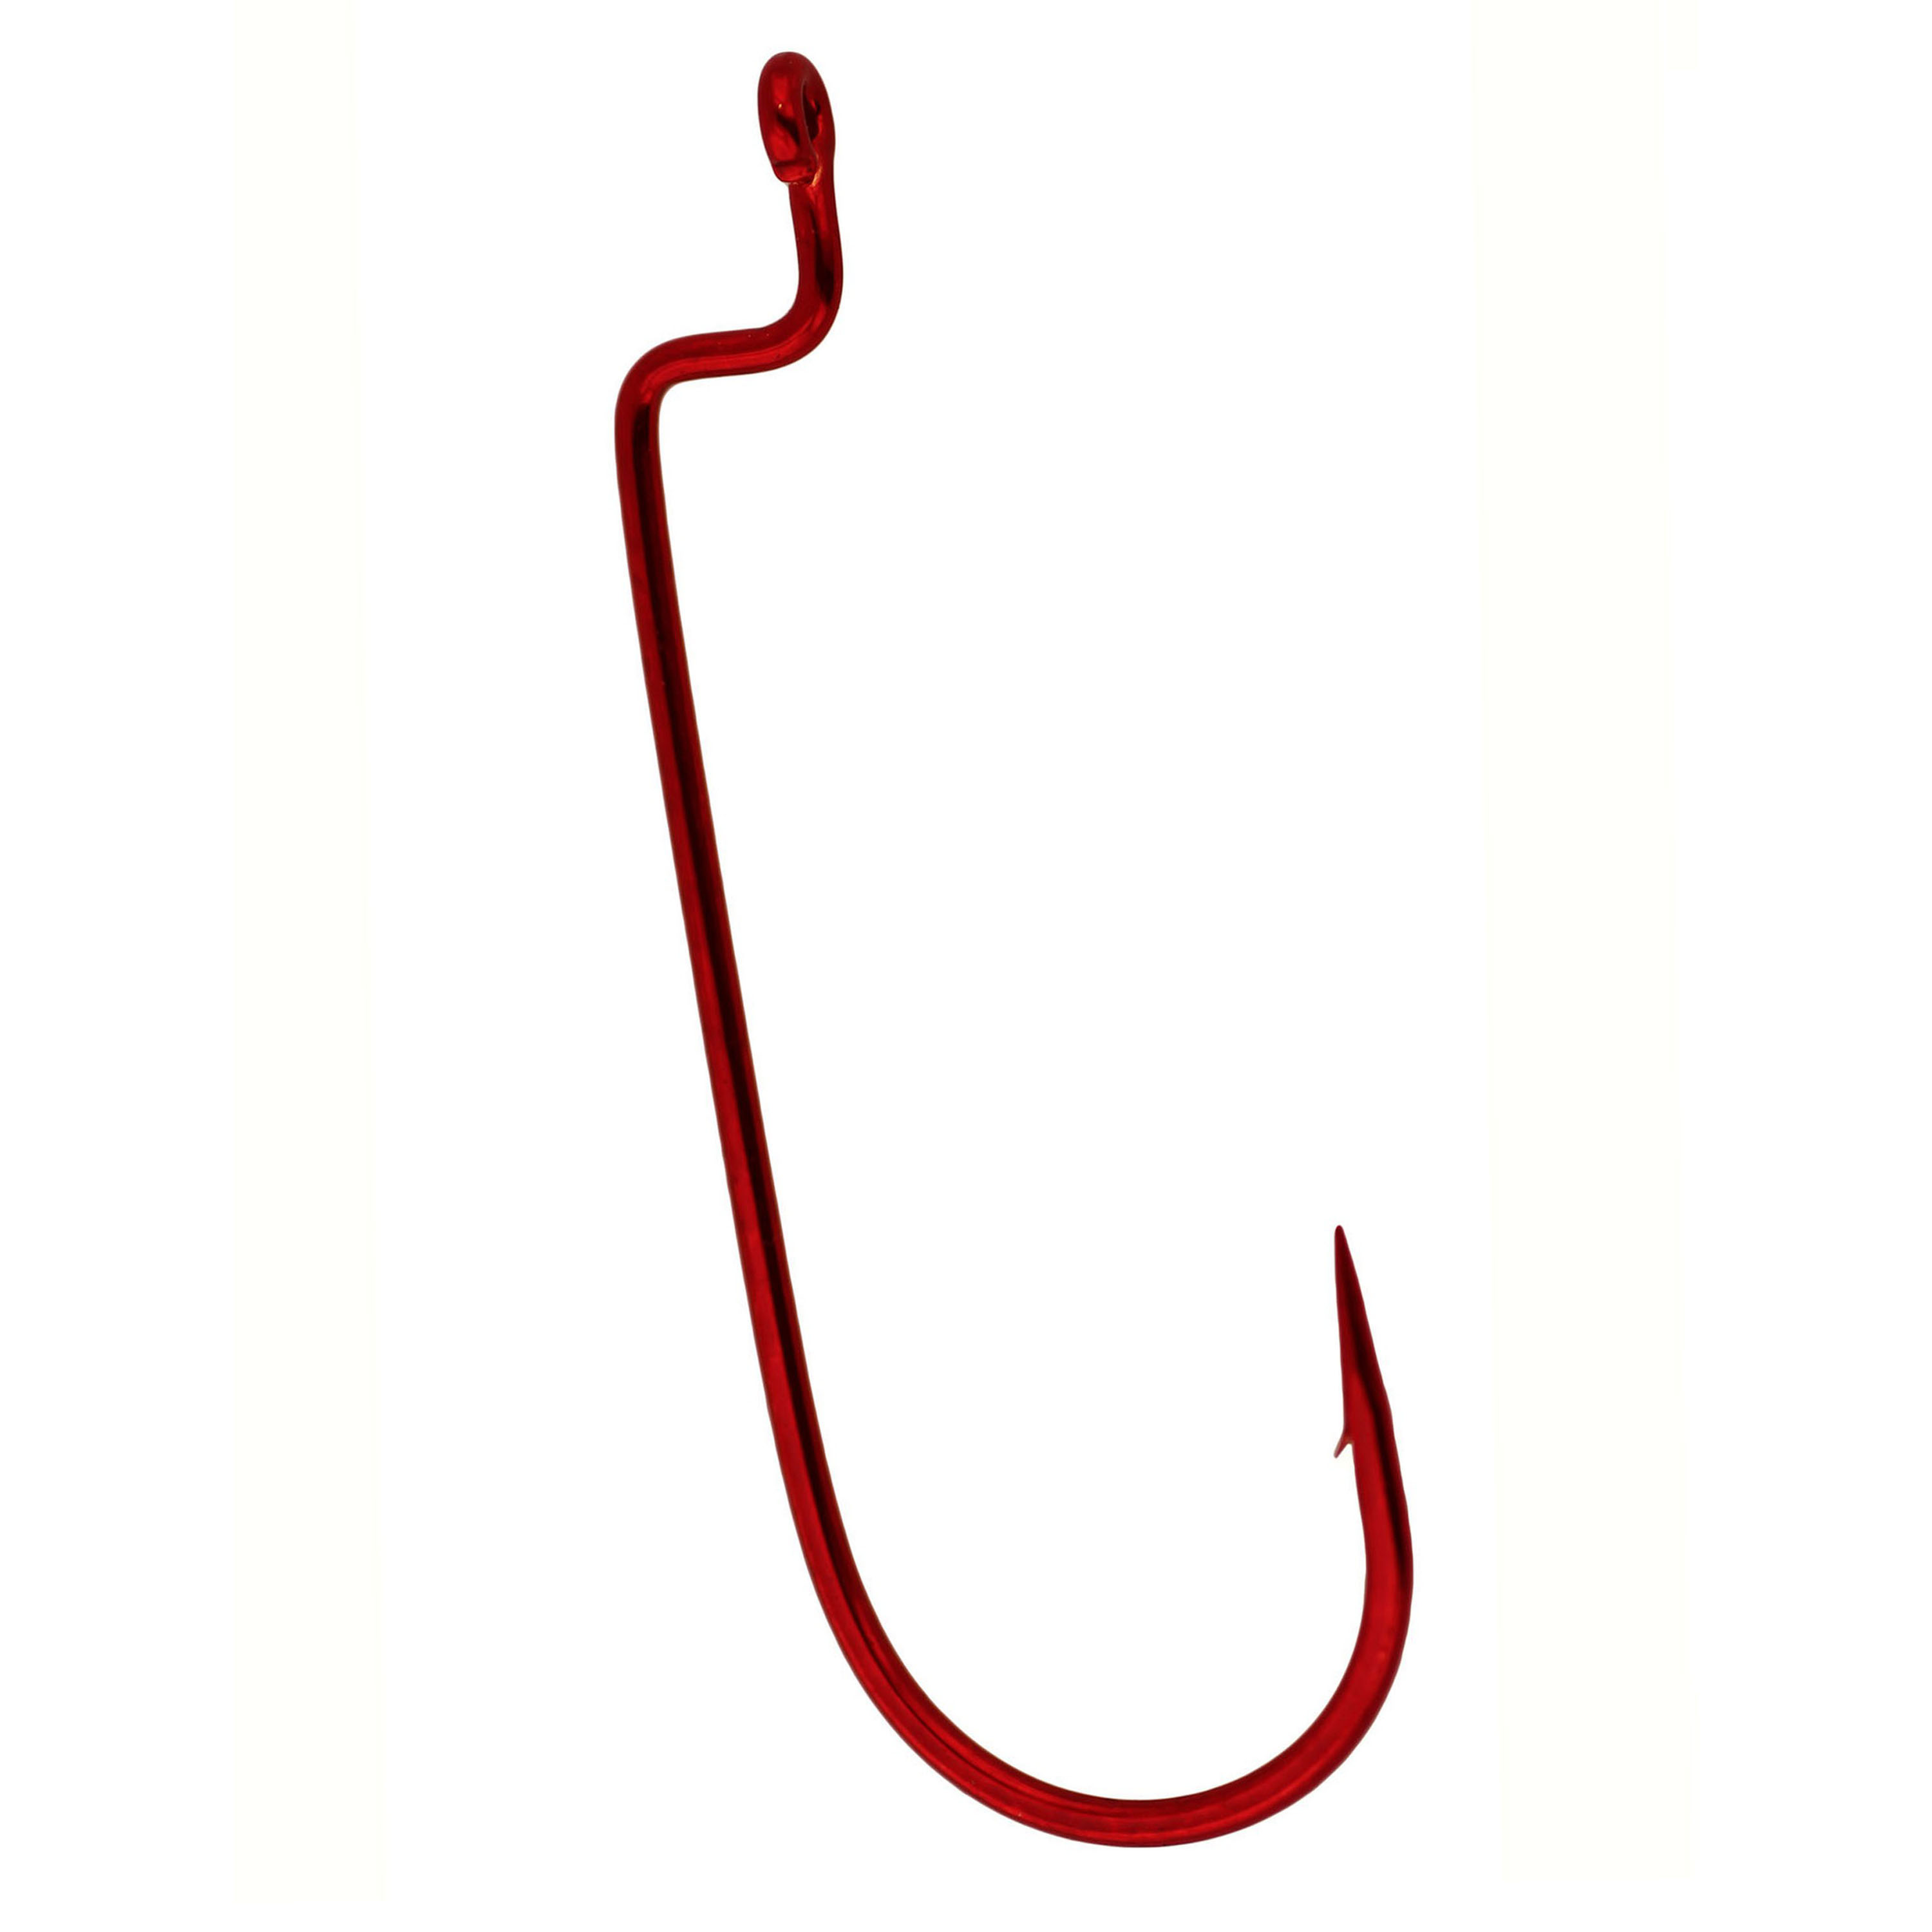 Worm Hook, Size 1/0, Needle Point, Round Bend, Offset, Ringed Eye